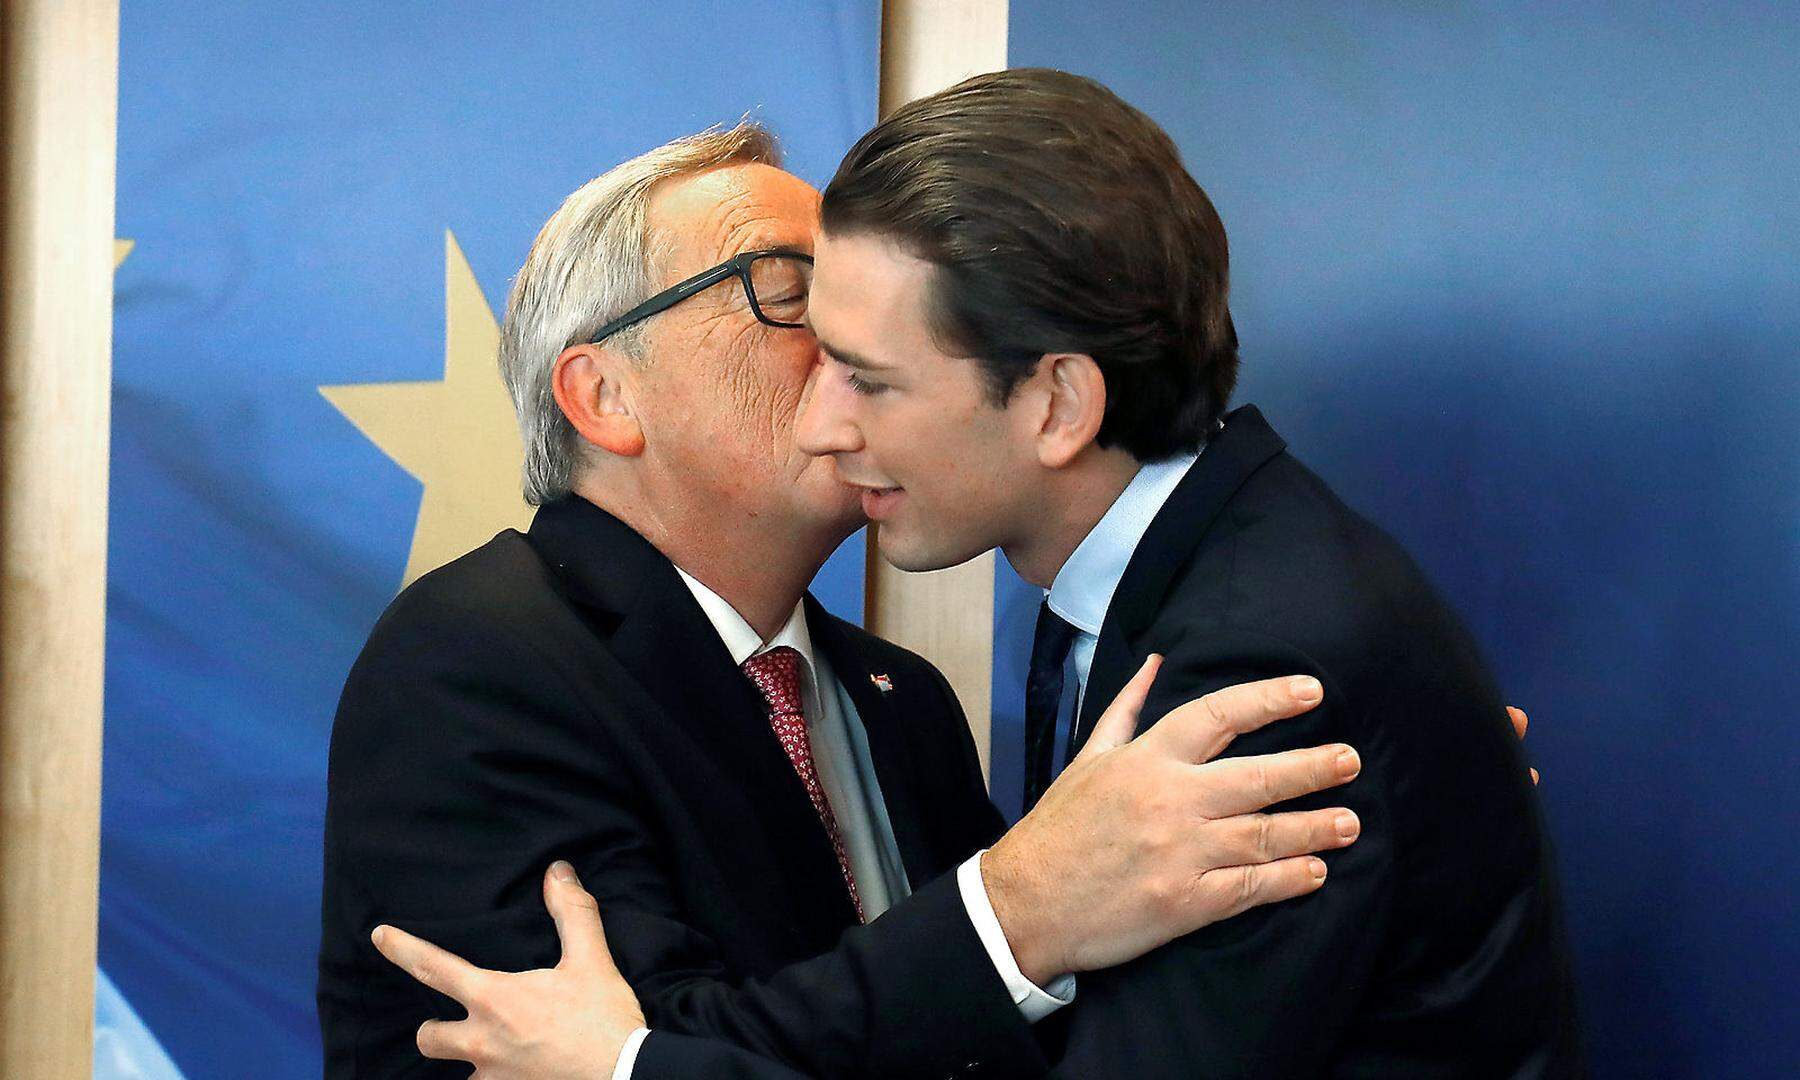 Austrian's Foreign Minister Sebastian Kurz is welcomed by European Commission President Jean-Claude Juncker in Brussels